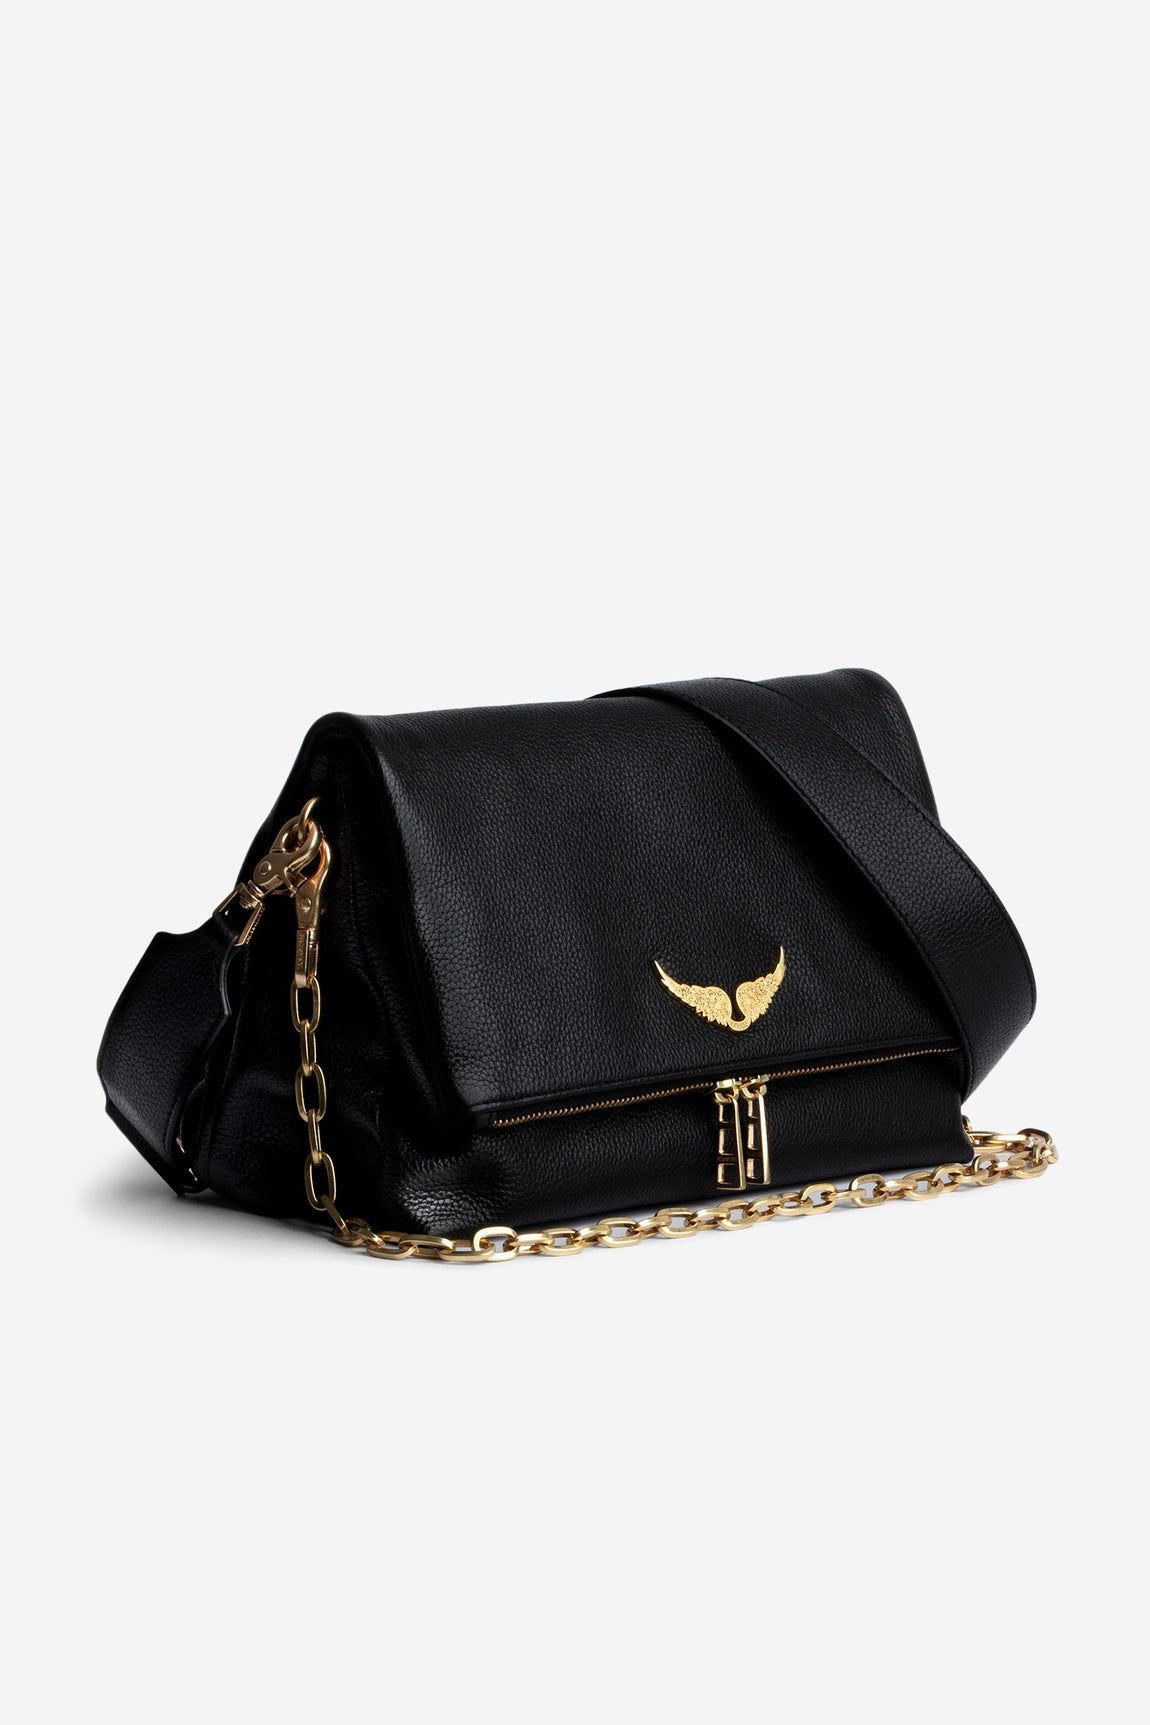 Rocky bag, black-gold